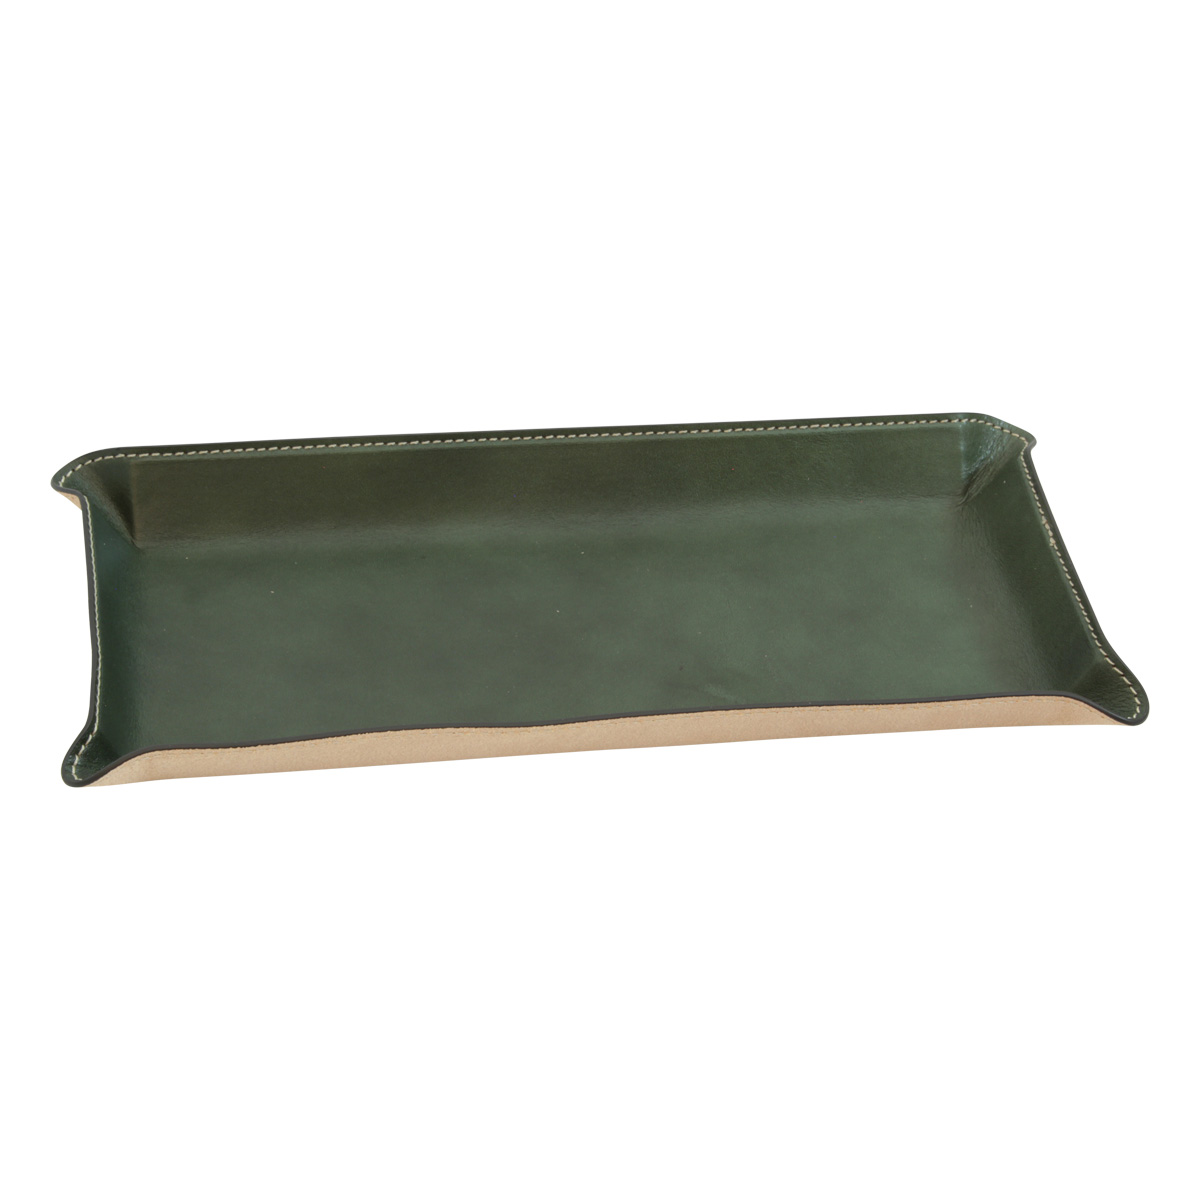 Leather desk tray - green | 762089VE US | Old Angler Firenze